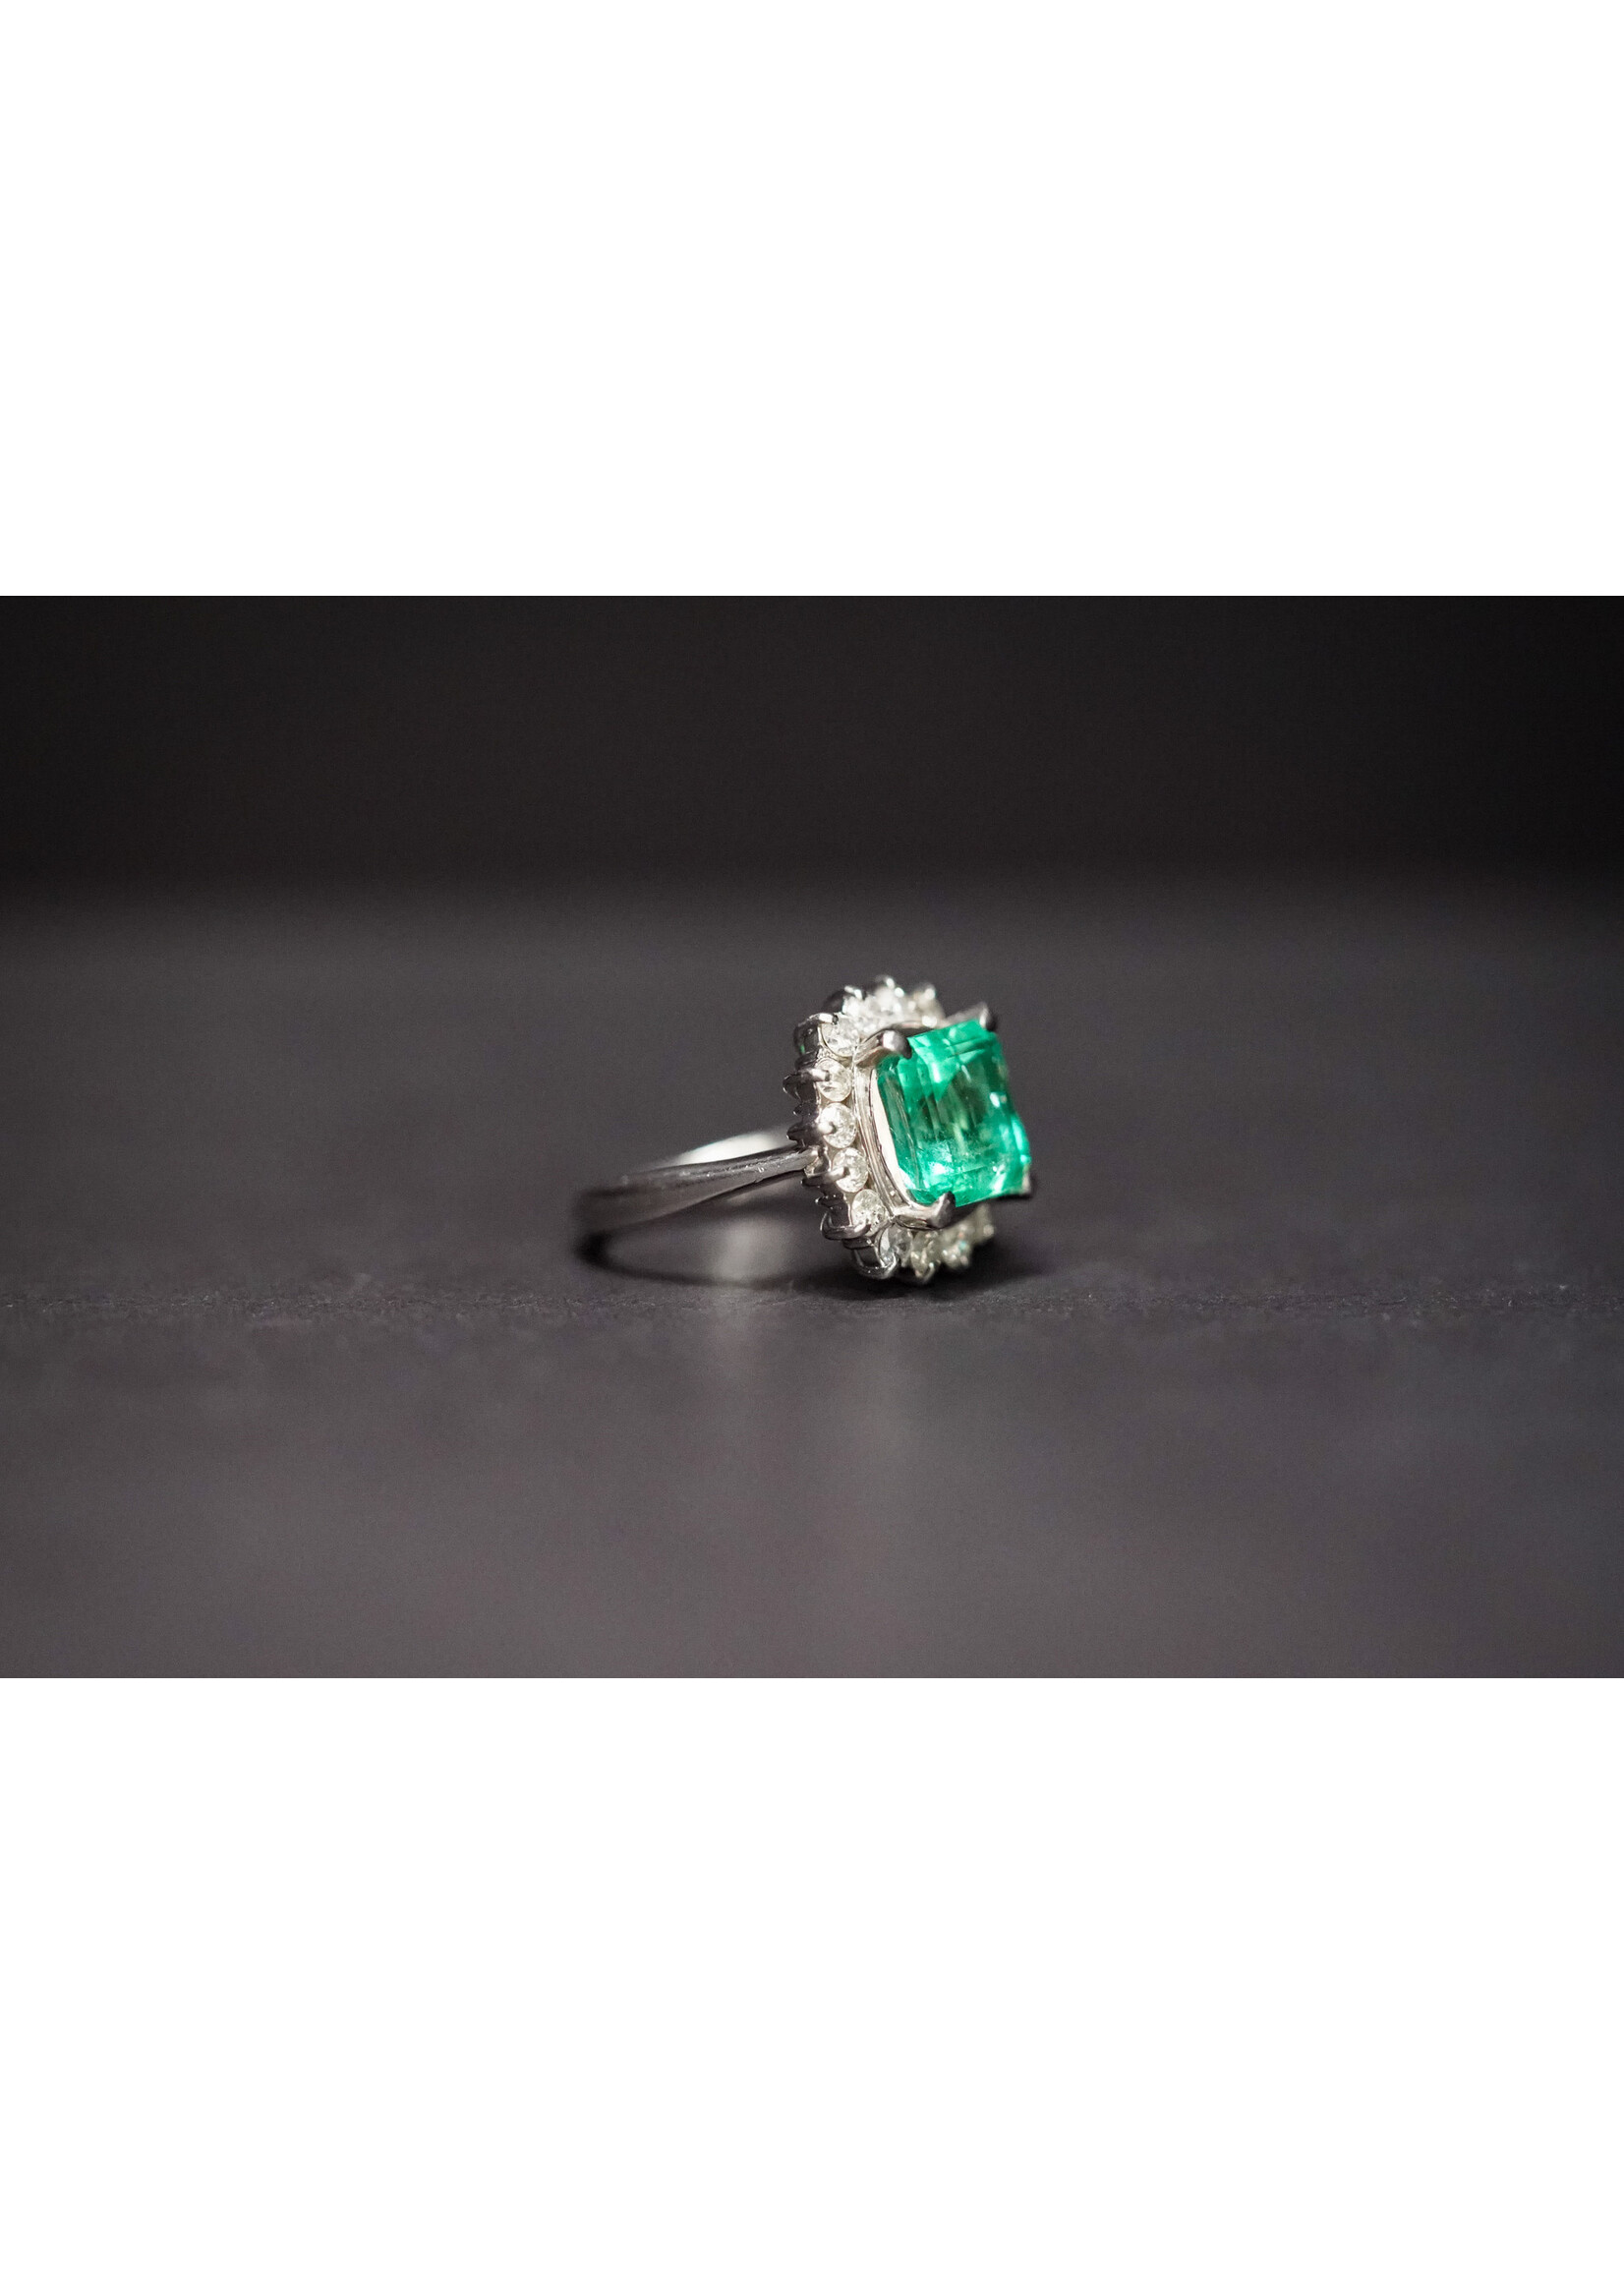 Platinum 10.4g 5.50ctw (4.50ctr) Columbian Emerald & Diamond Halo Ring (size 6.5)